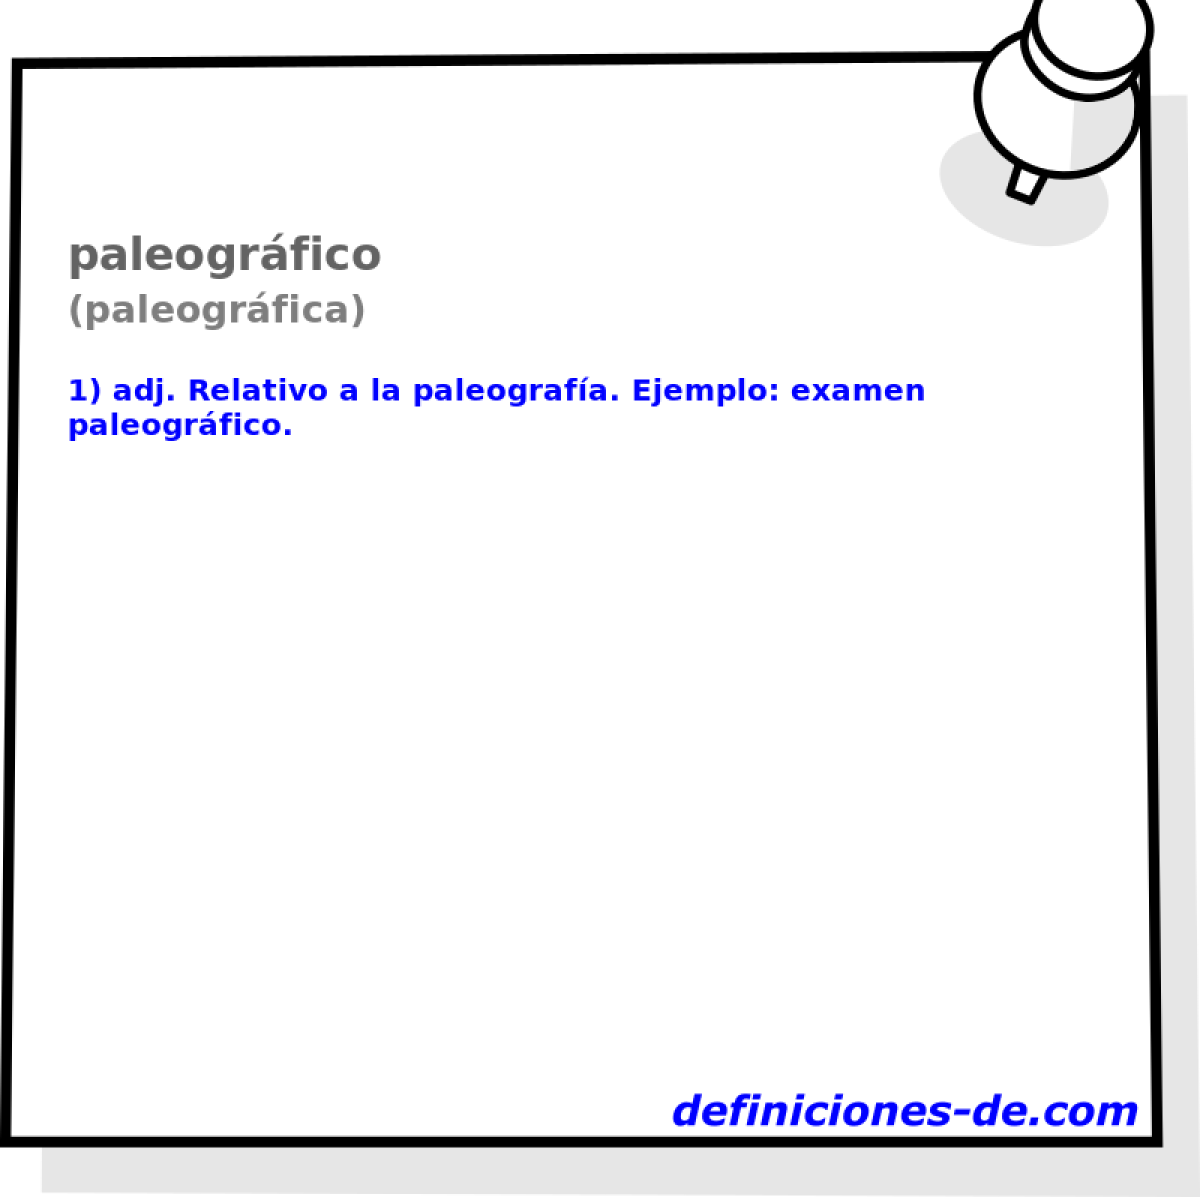 paleogrfico (paleogrfica)